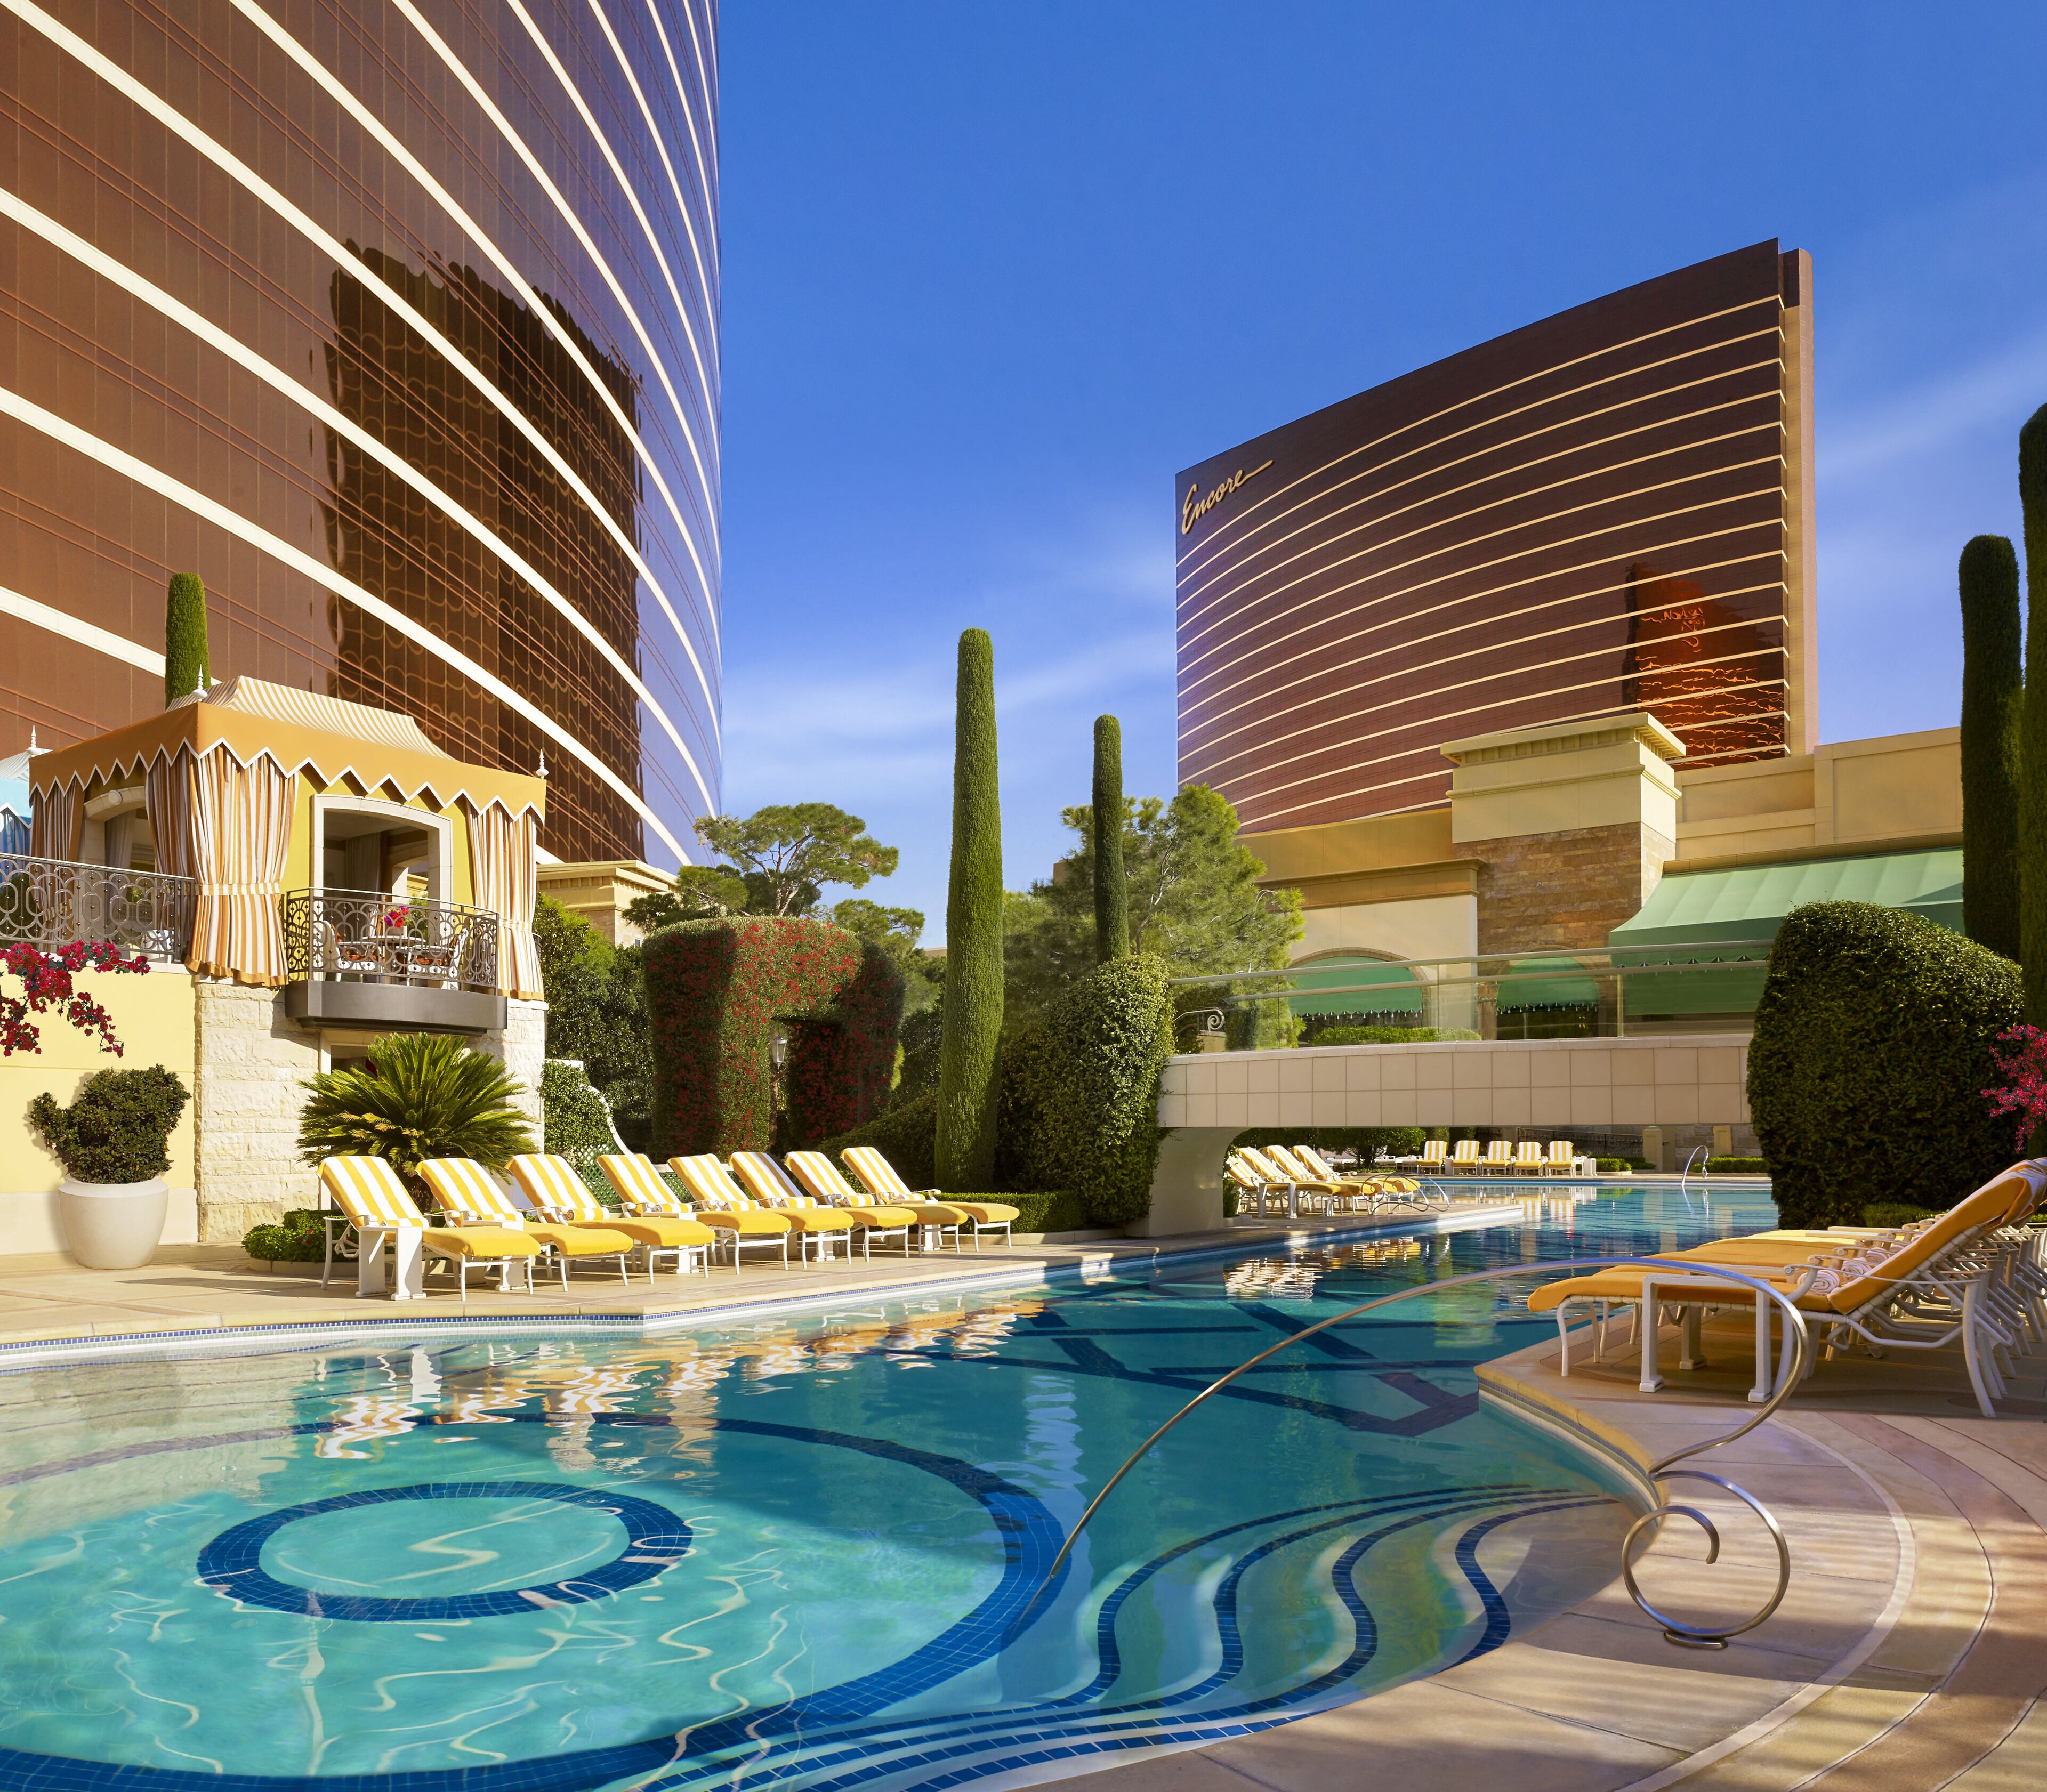 Pool view of Wynn Las Vegas